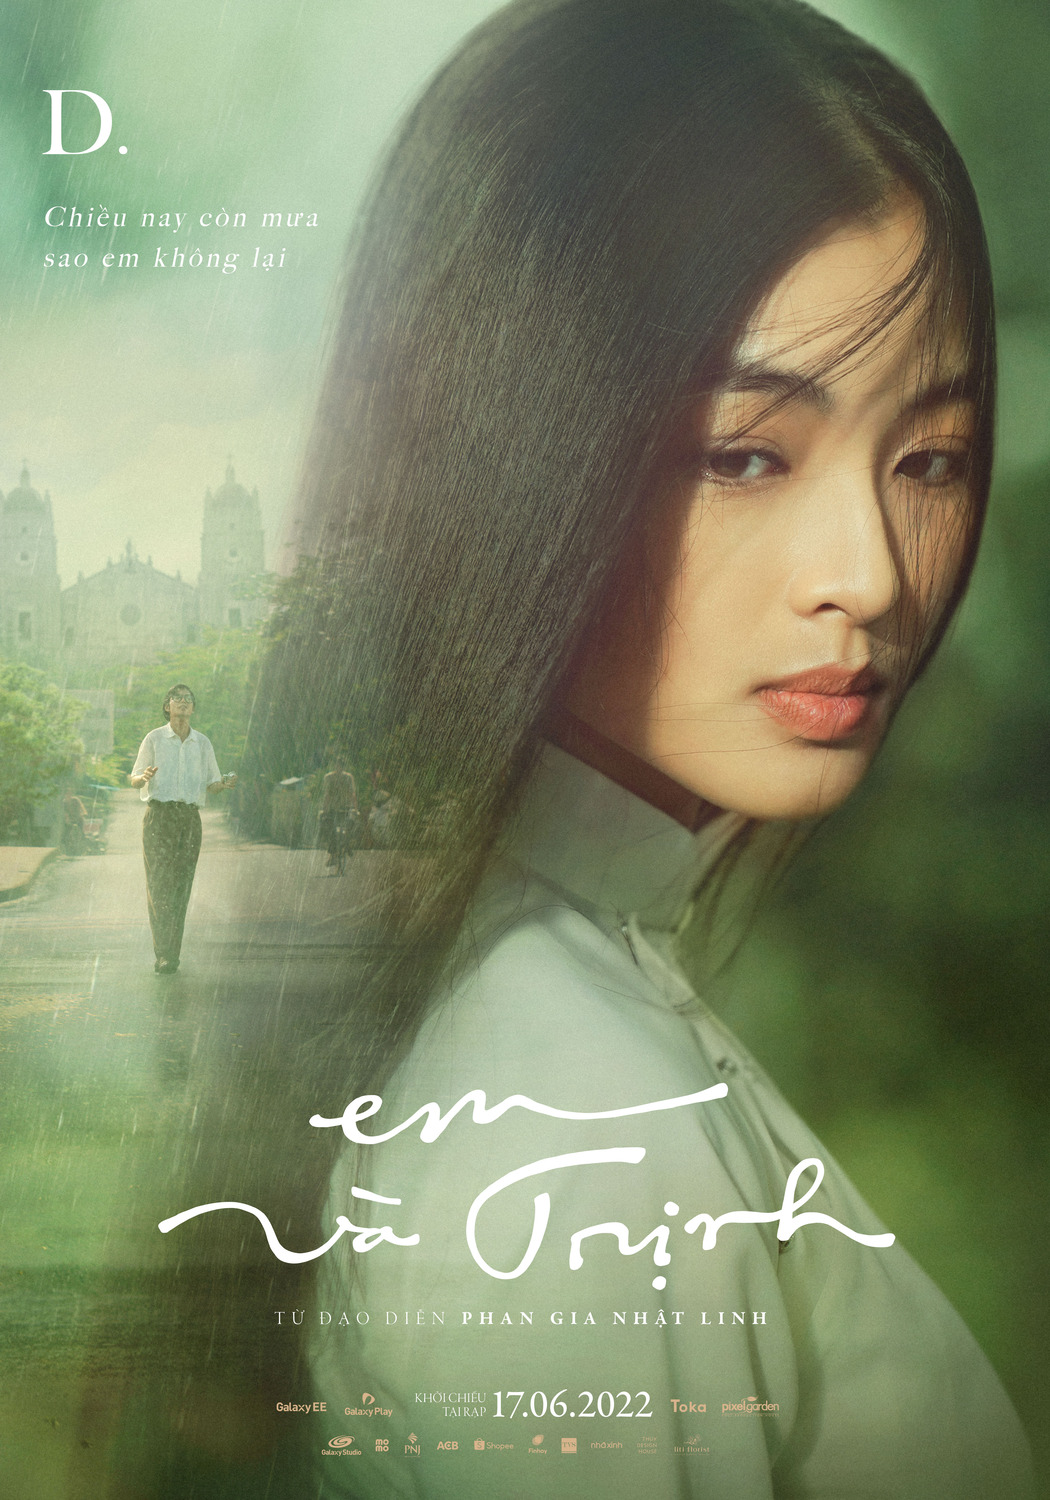 Extra Large Movie Poster Image for Em Va Trinh (#11 of 19)